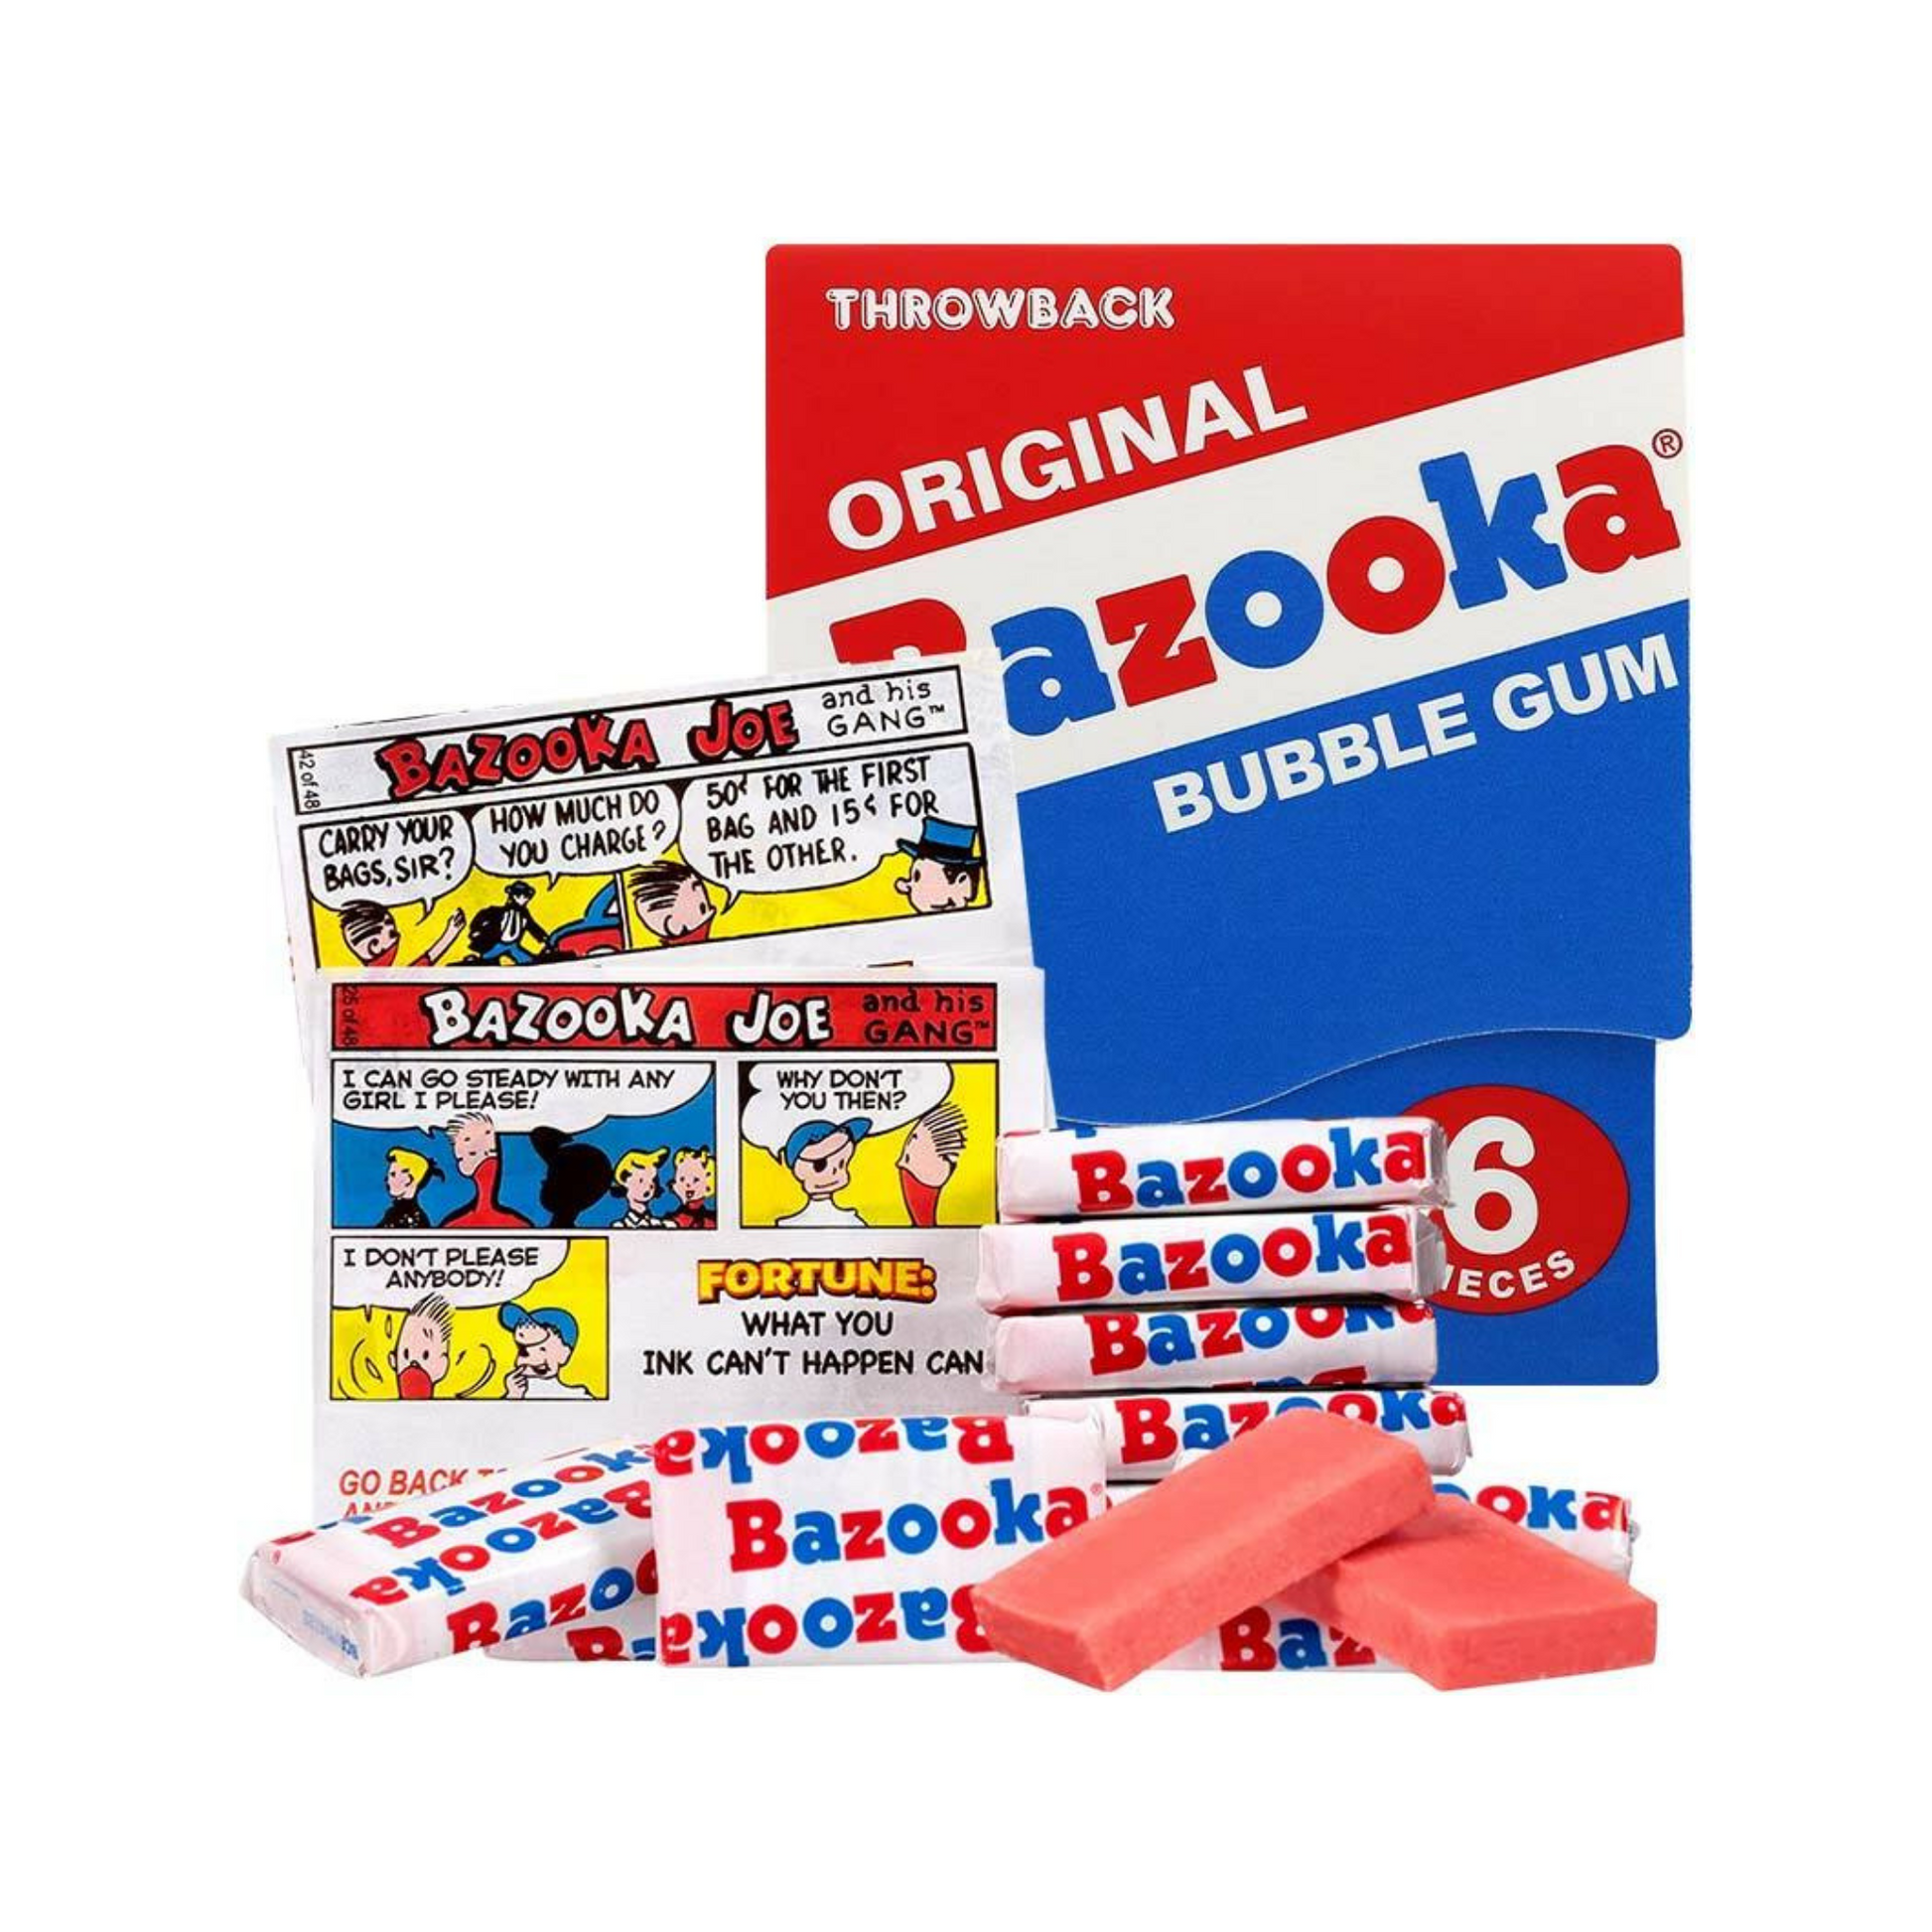 bazooka bubble gum with comics